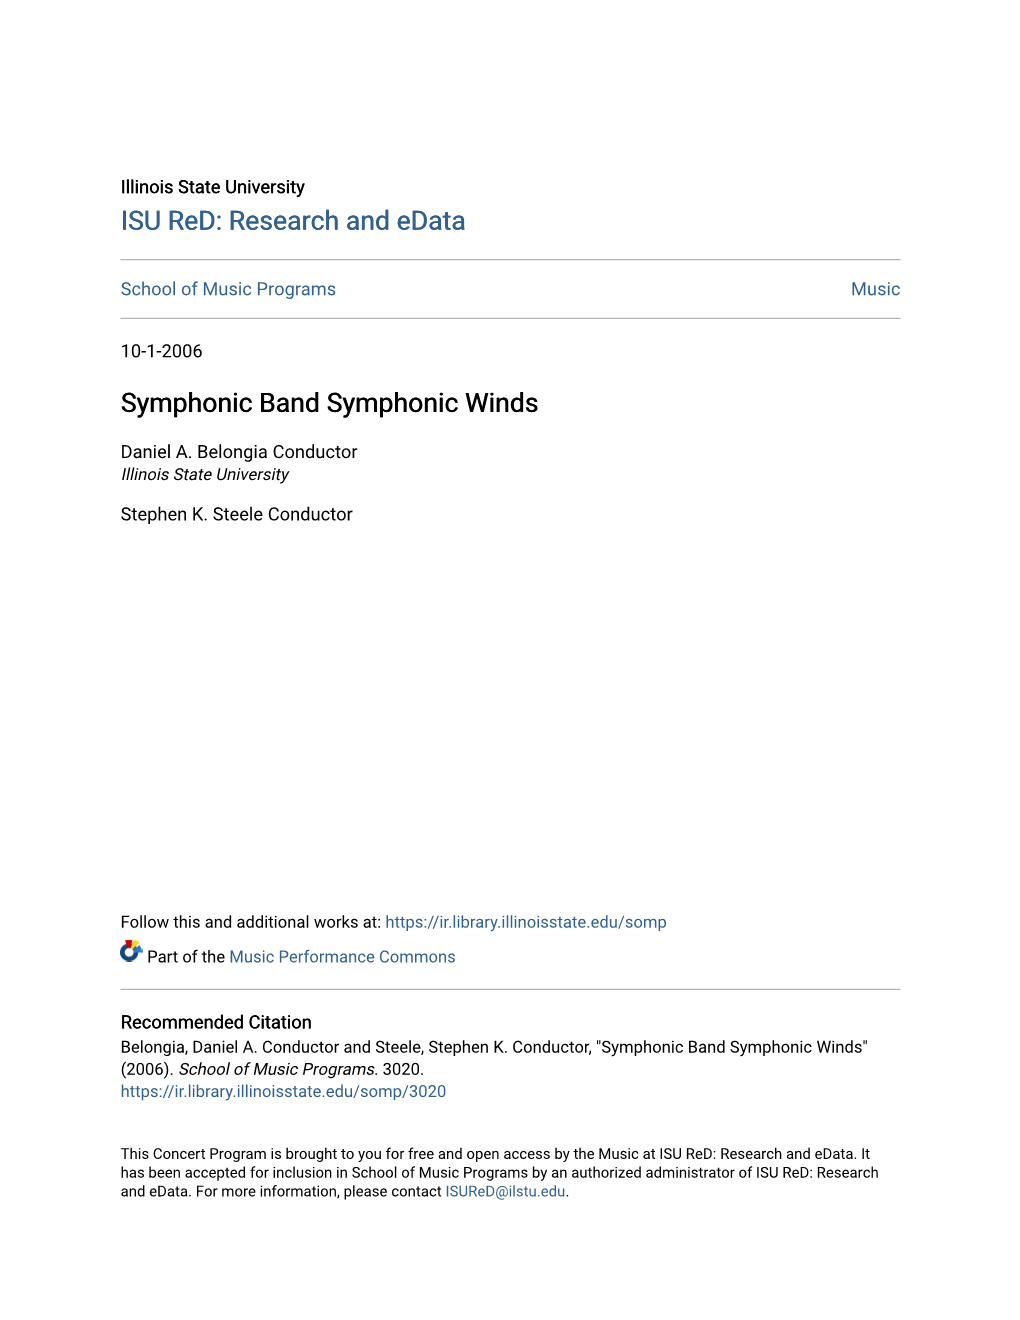 Symphonic Band Symphonic Winds